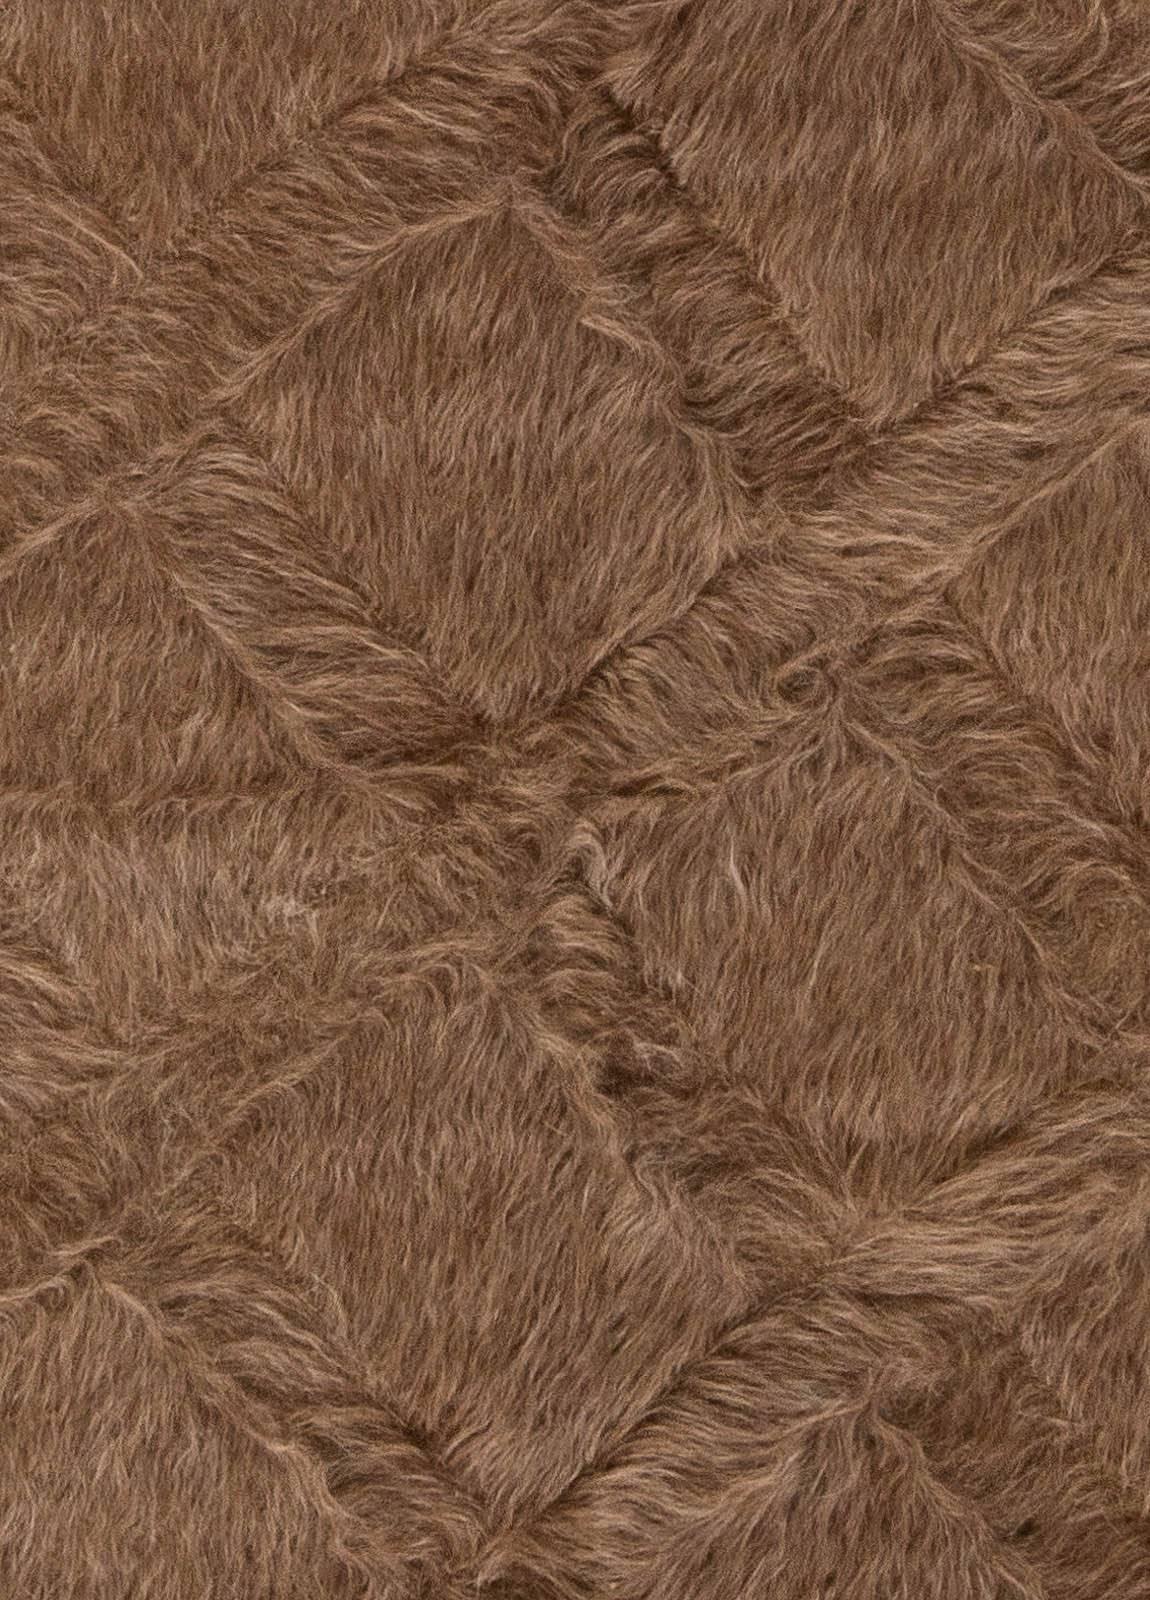 Modern taurus collection geometric goat hair rug by Doris Leslie Blau.
Size: 5'4